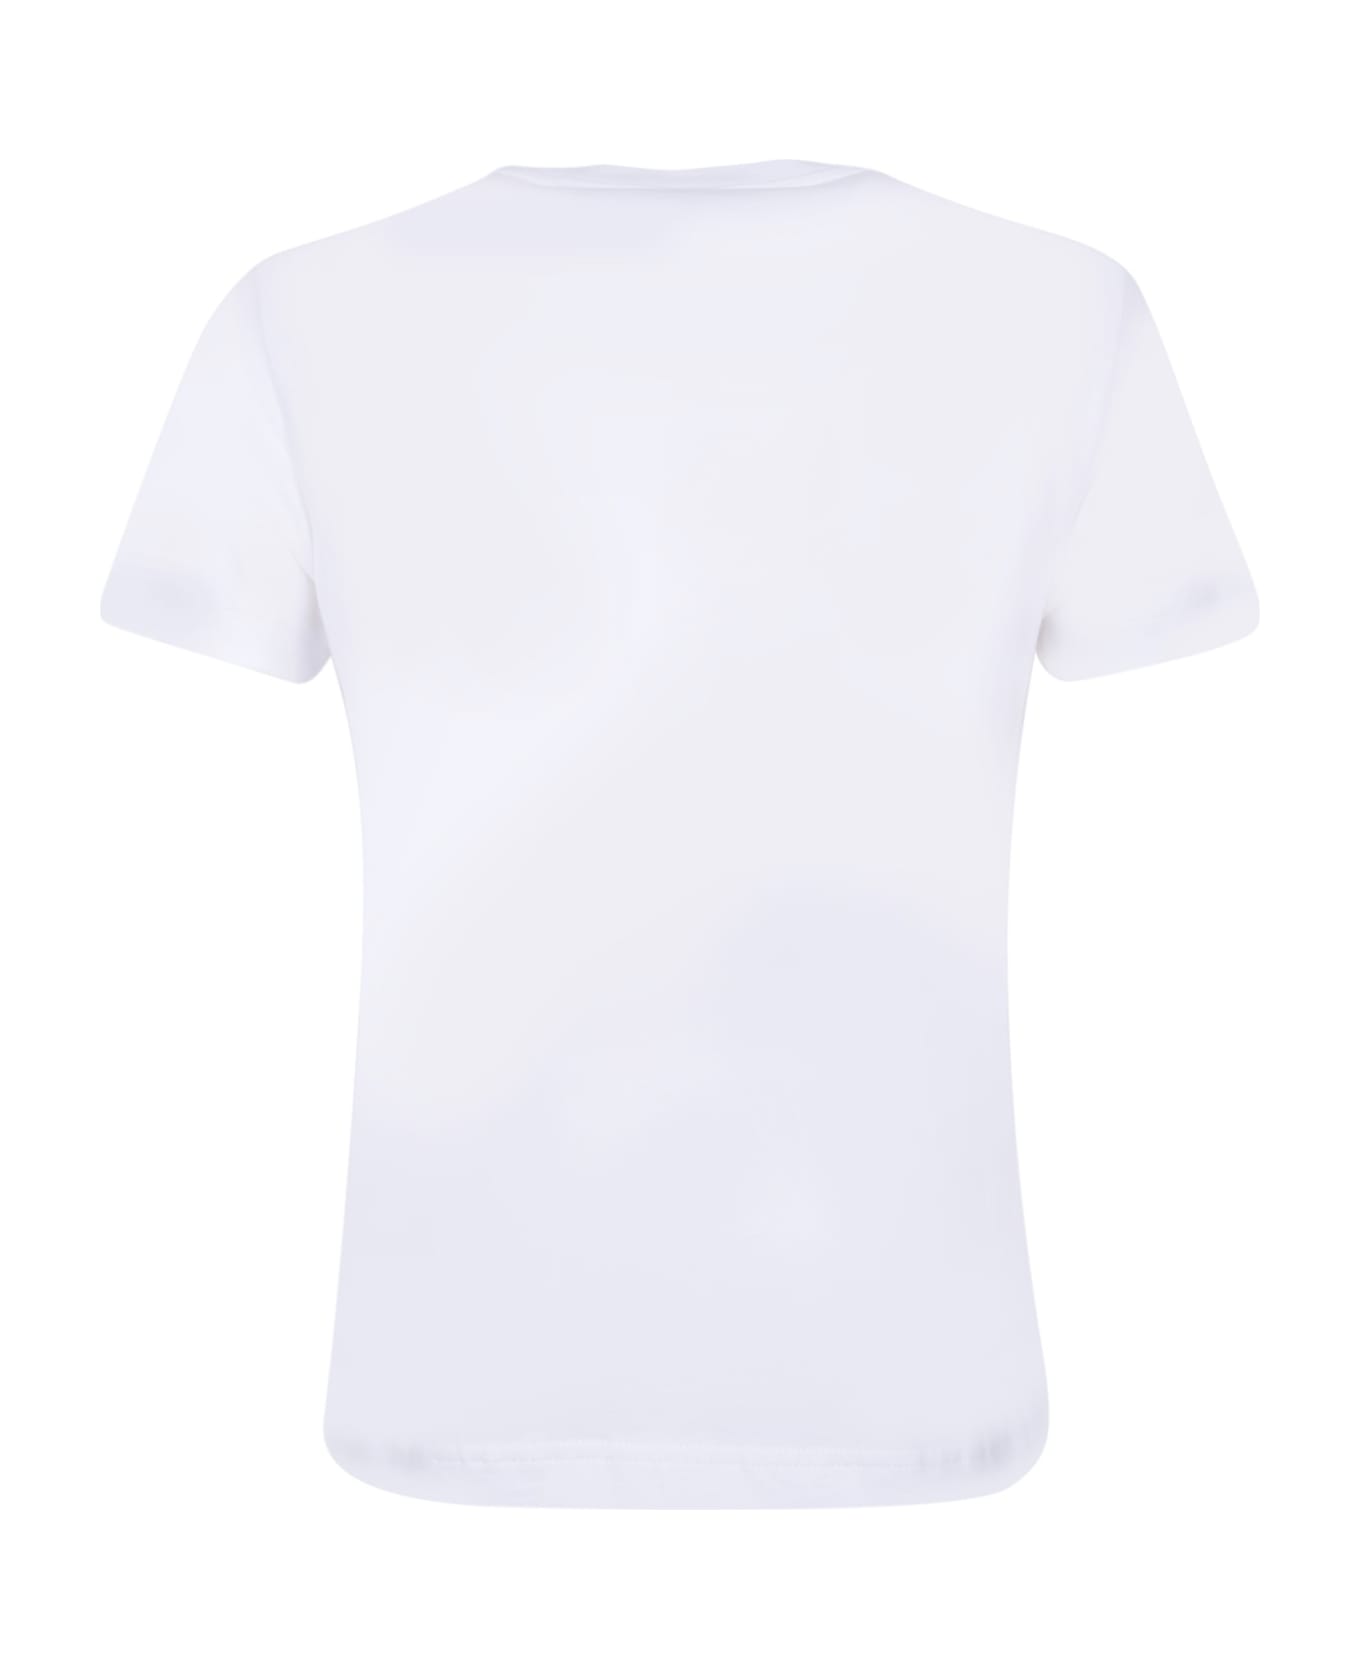 Casablanca Unity Is Power' White T-shirt - White